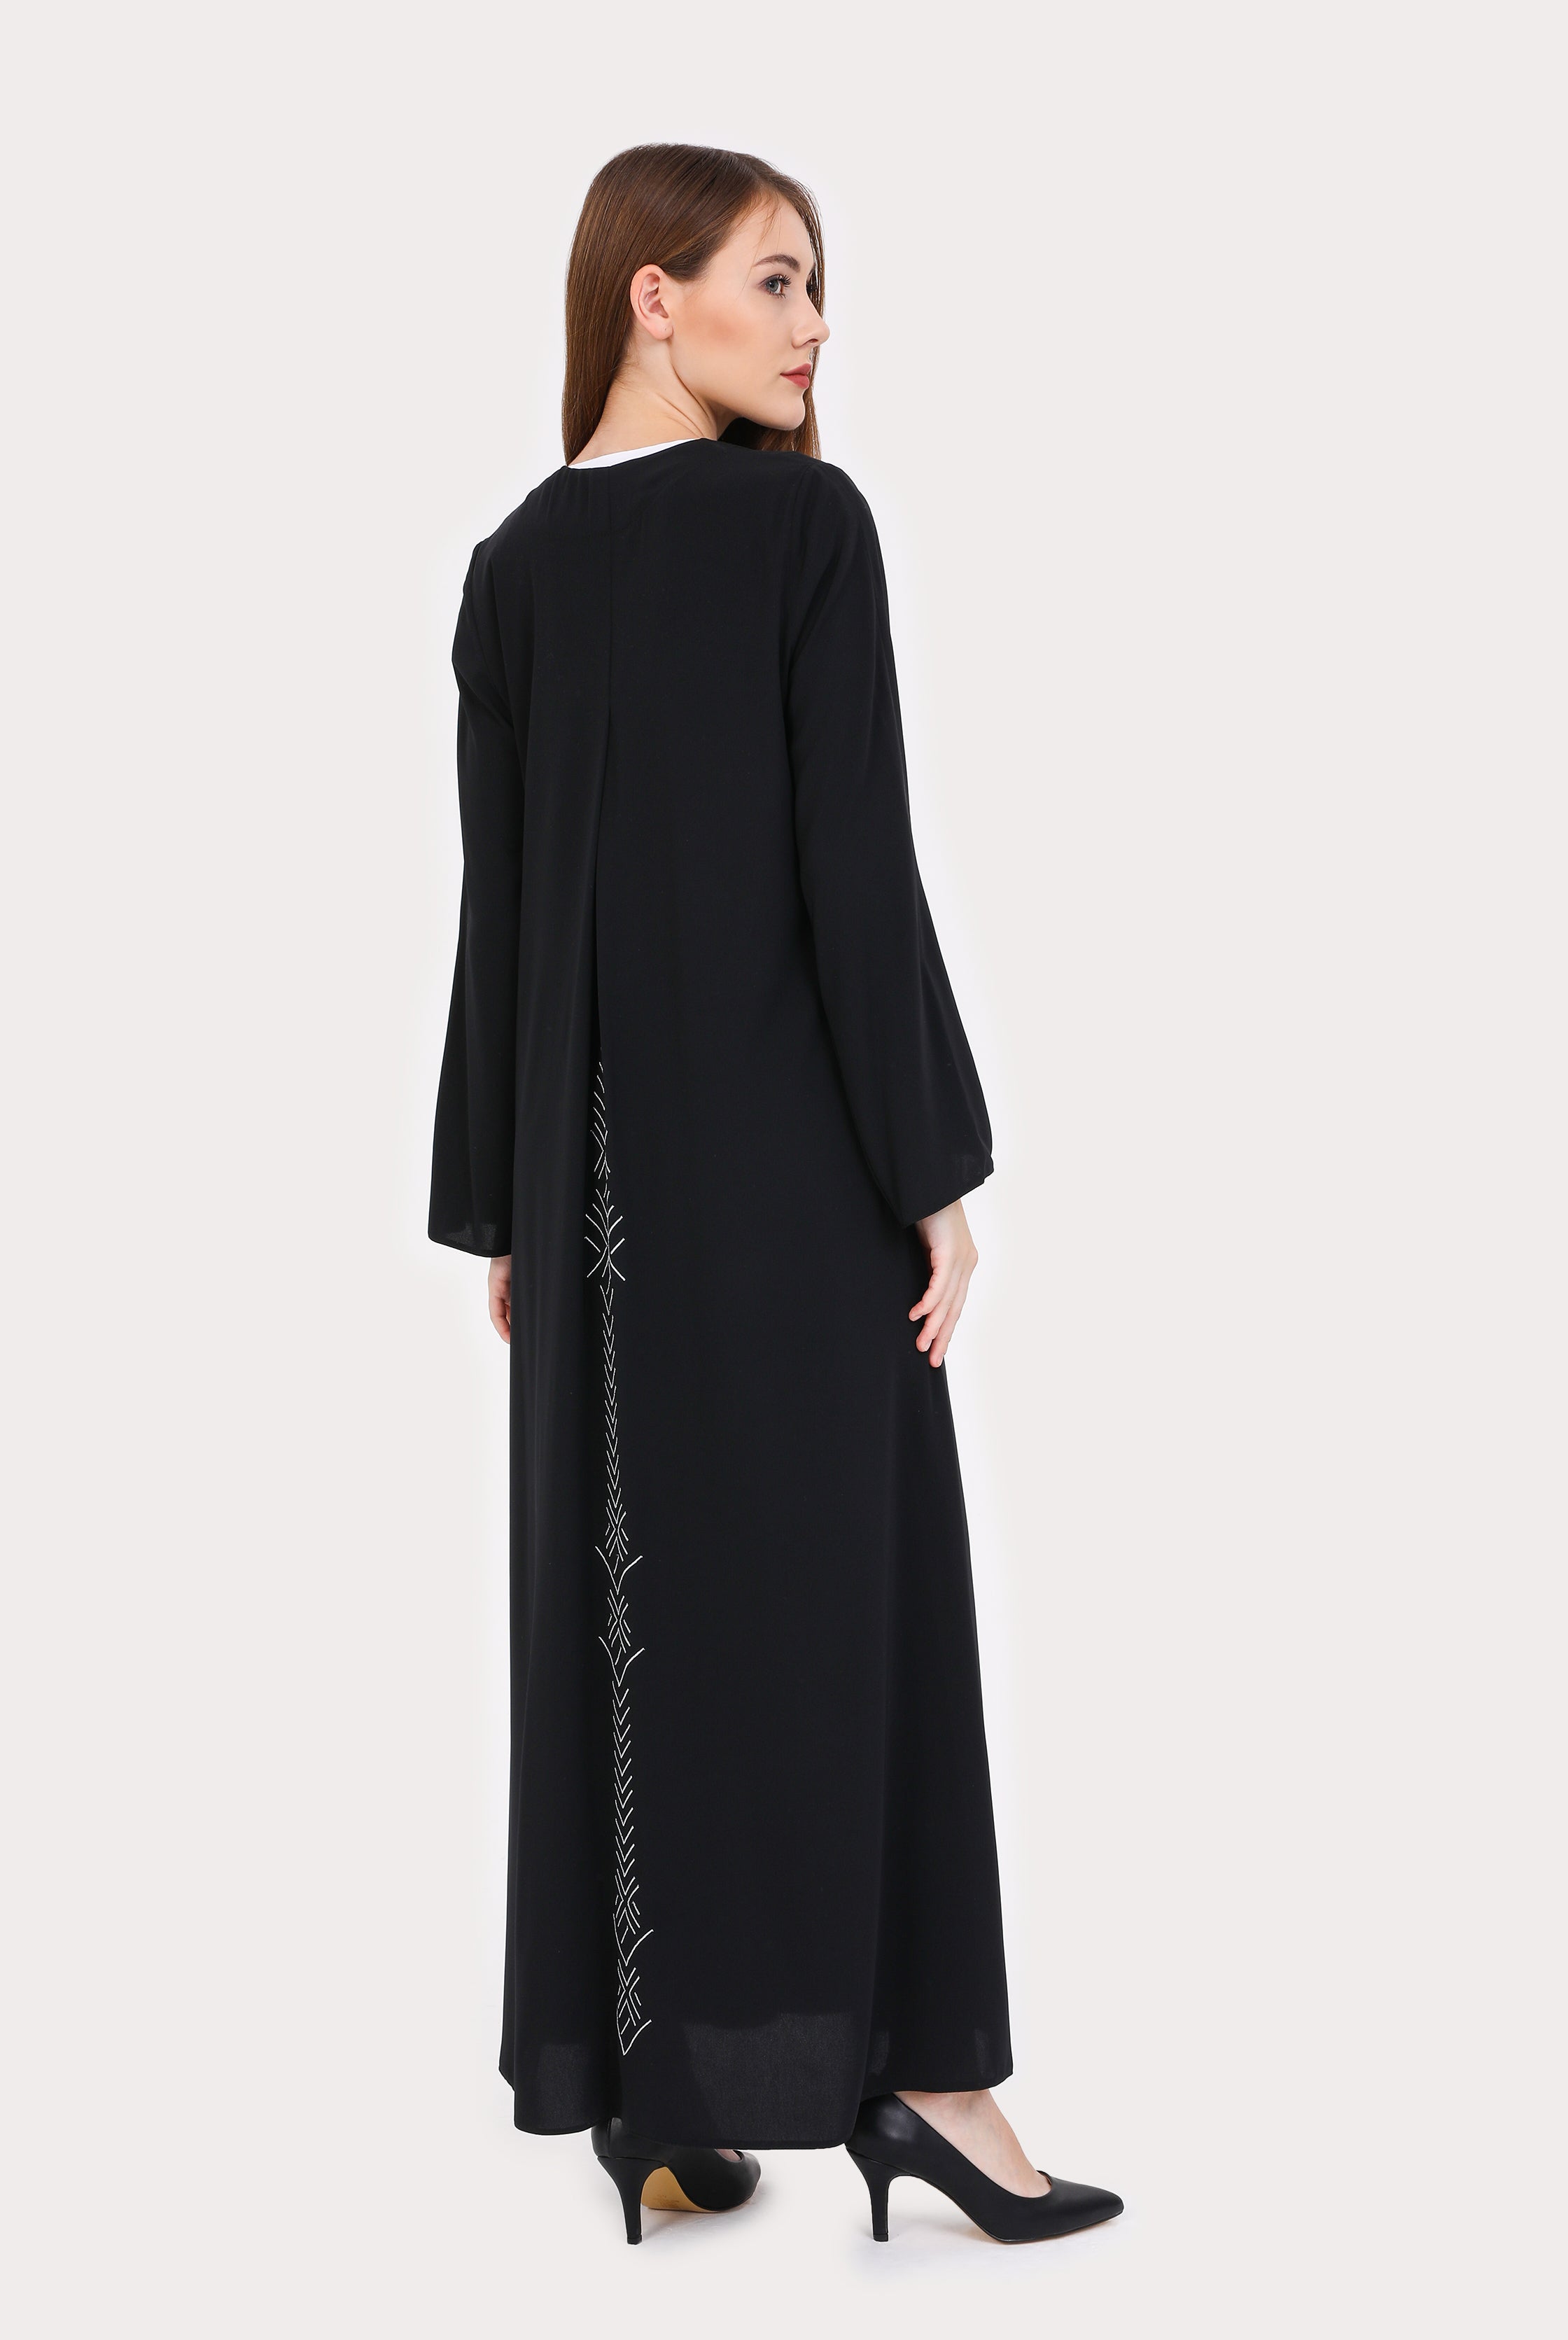 black zip up abaya